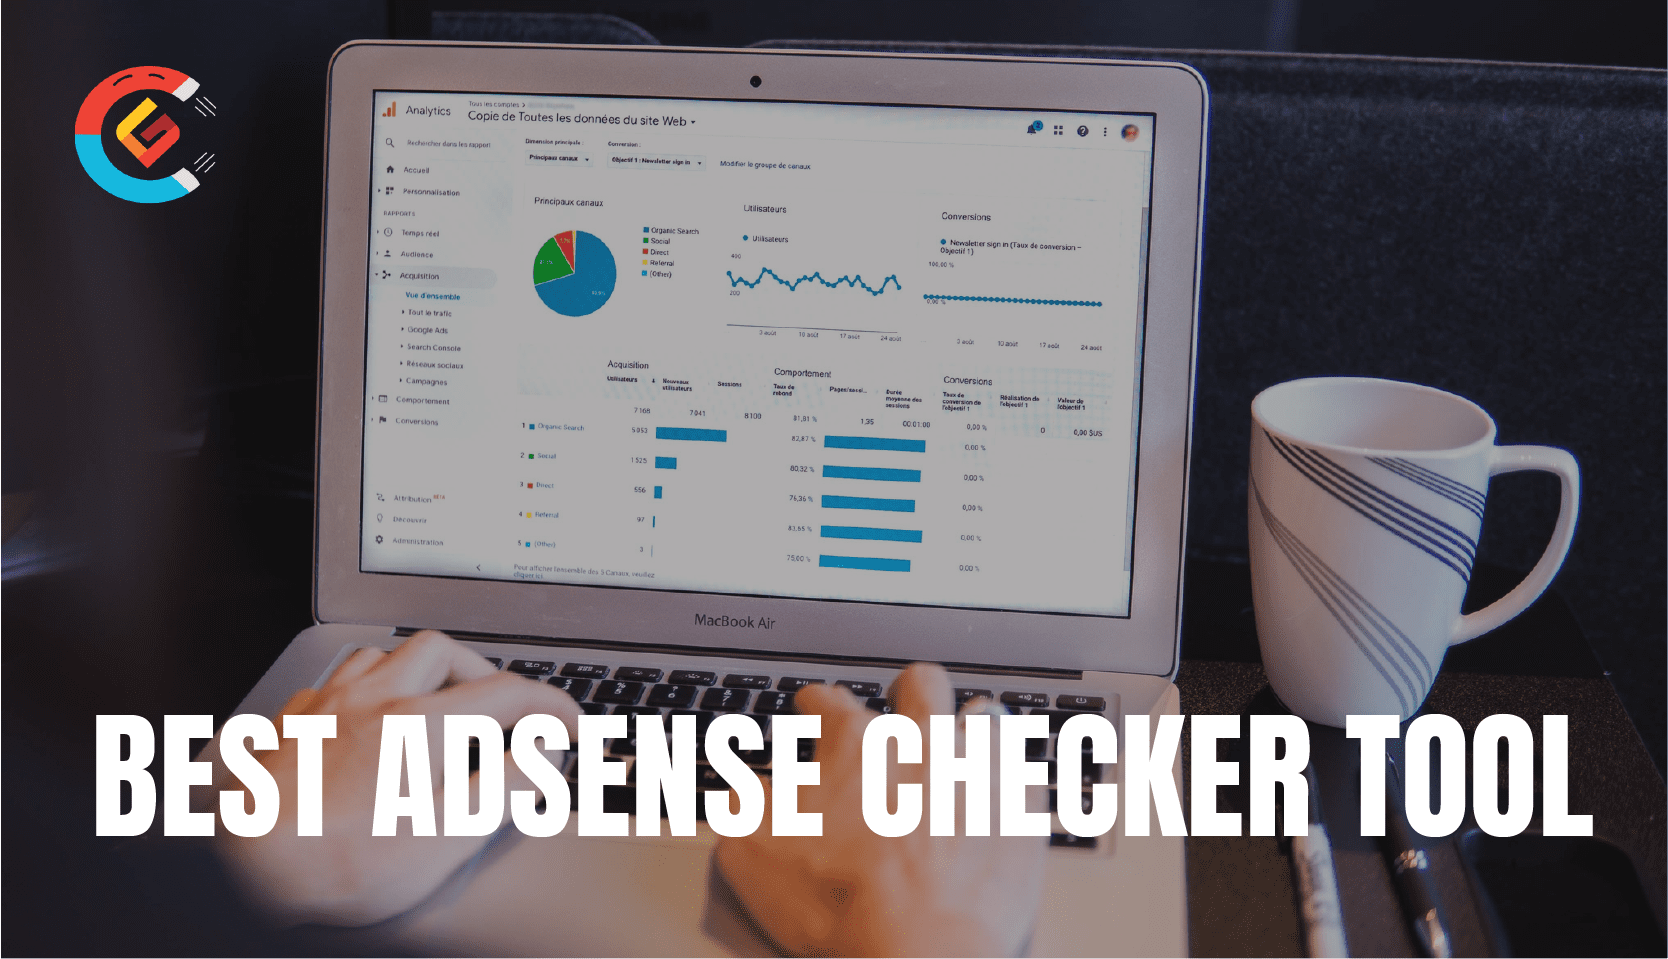 Best Adsense checker tool